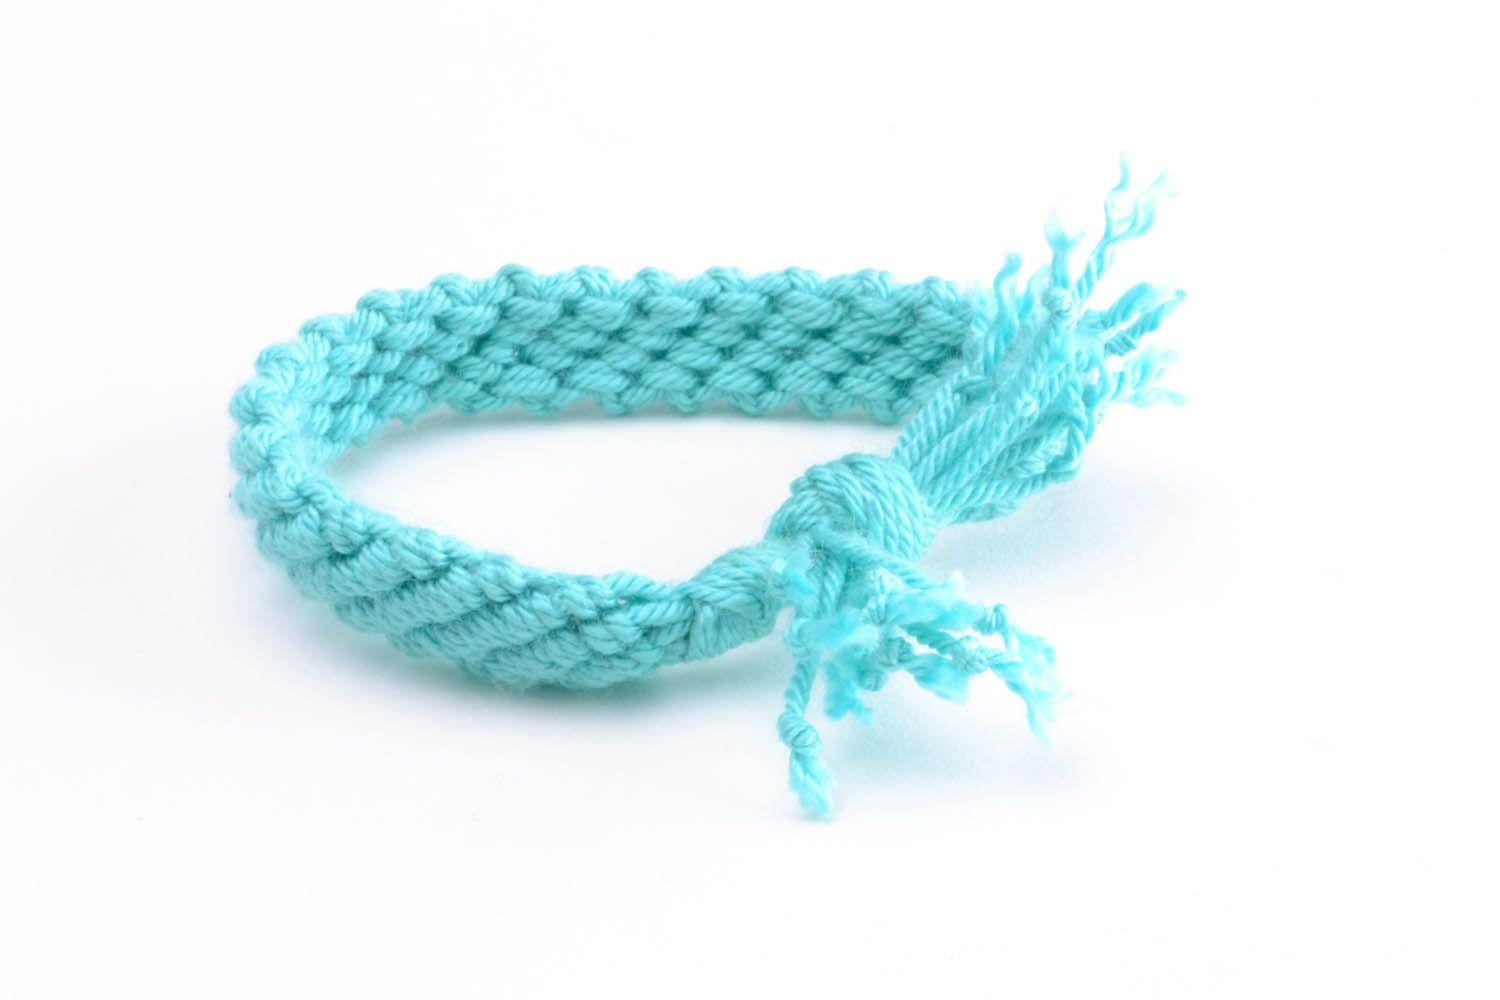 Braided bracelet made of blue threads photo 4